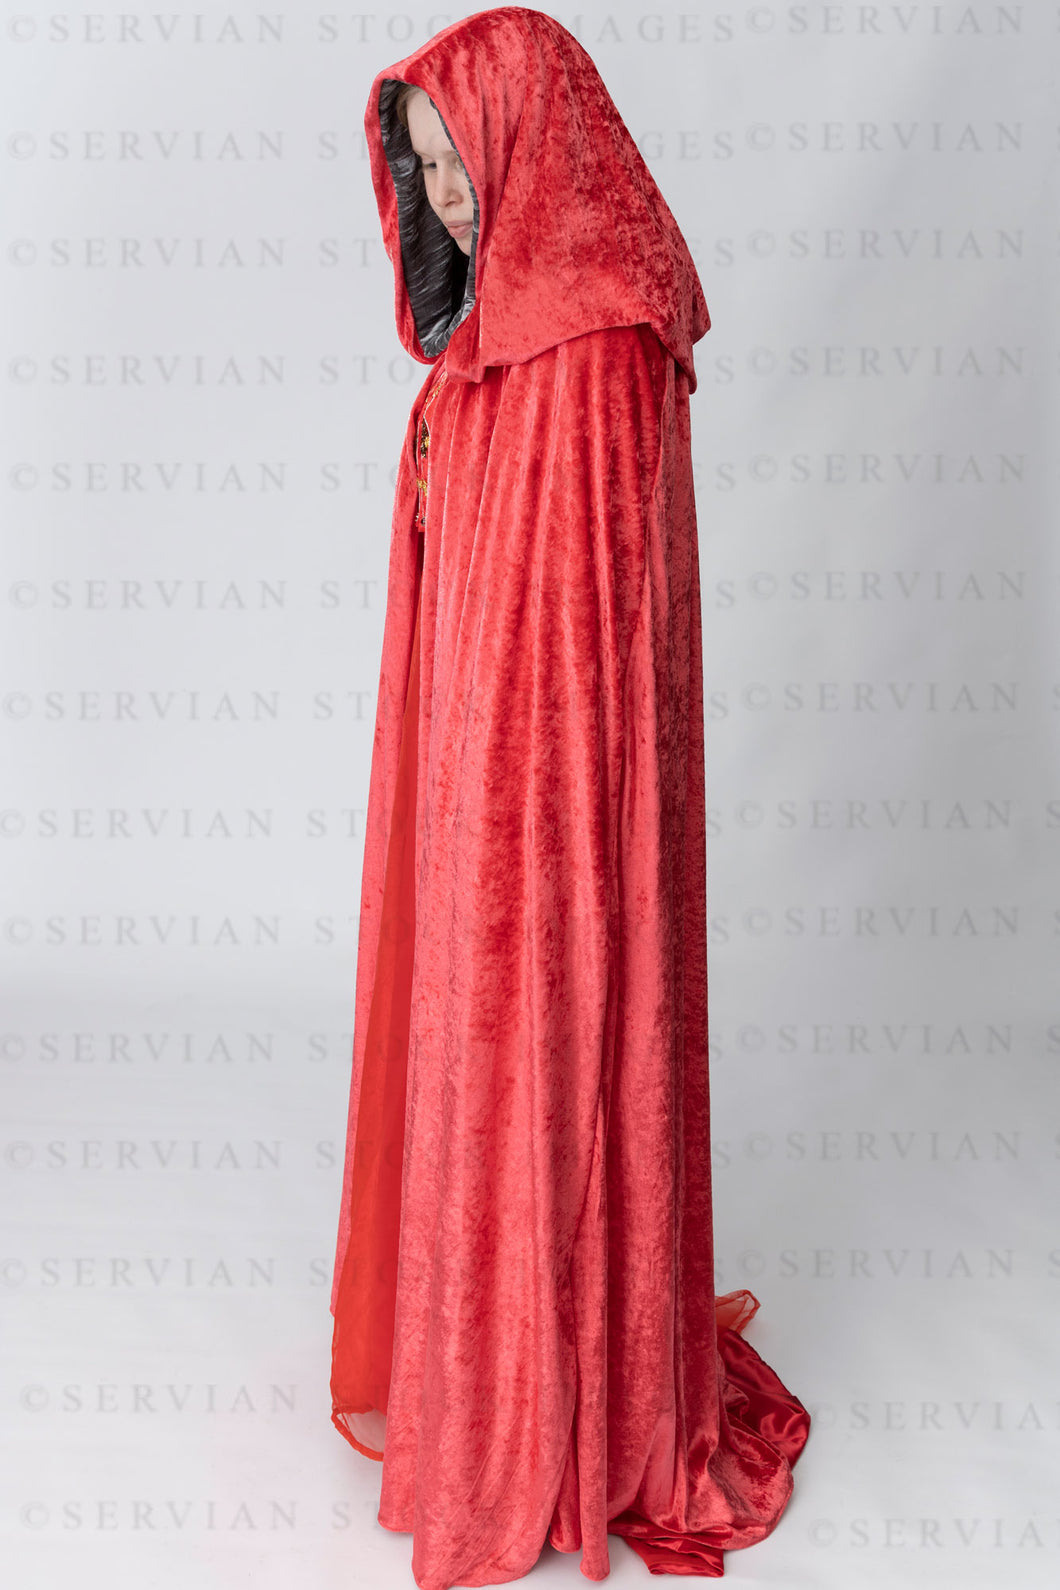 Medieval or High fantasy woman in a long red velvet cloak (Katherine5063)